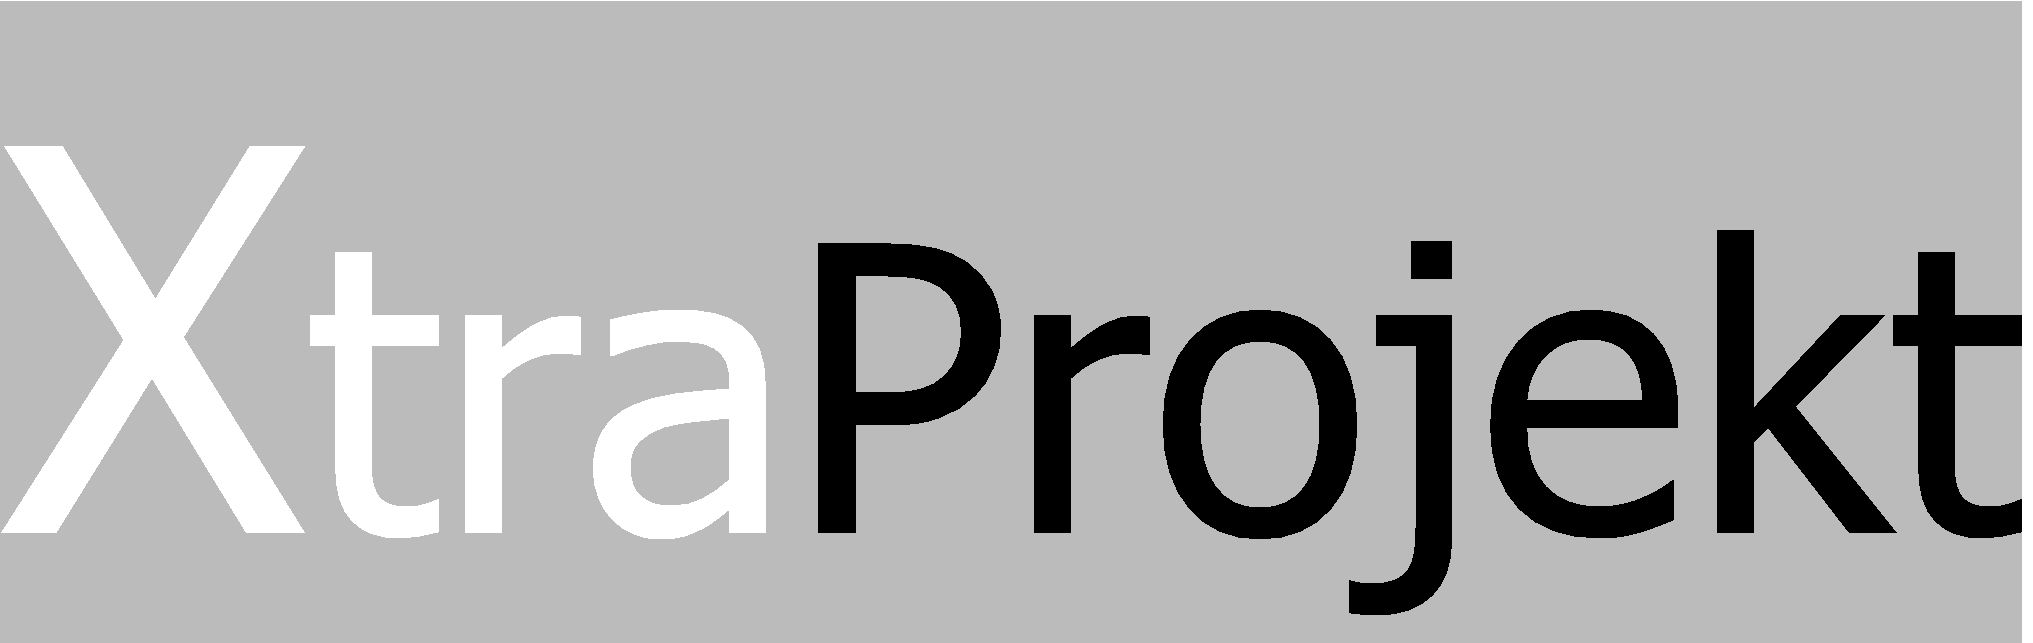 XtraProjekt Logo